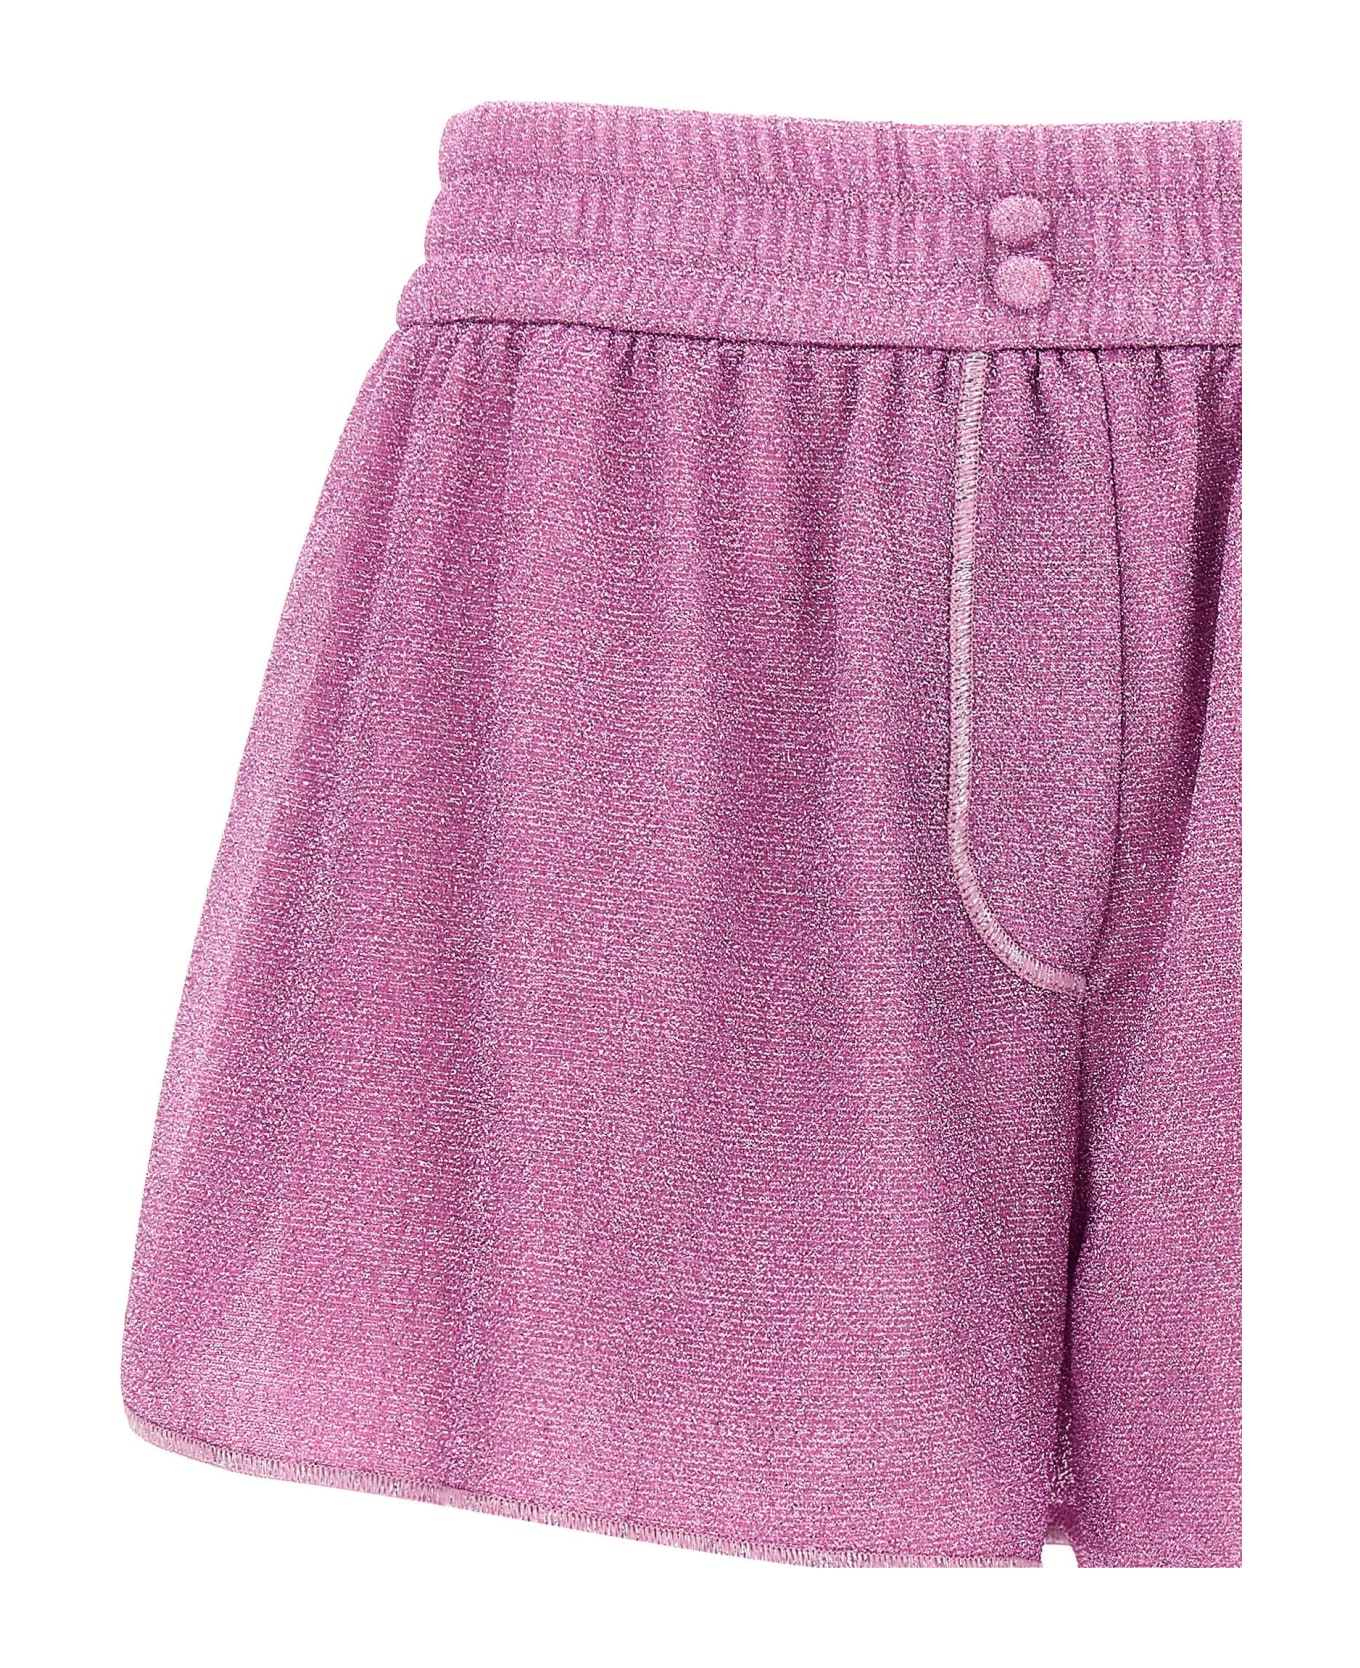 Oseree 'lumiere' Shorts - Purple ショートパンツ